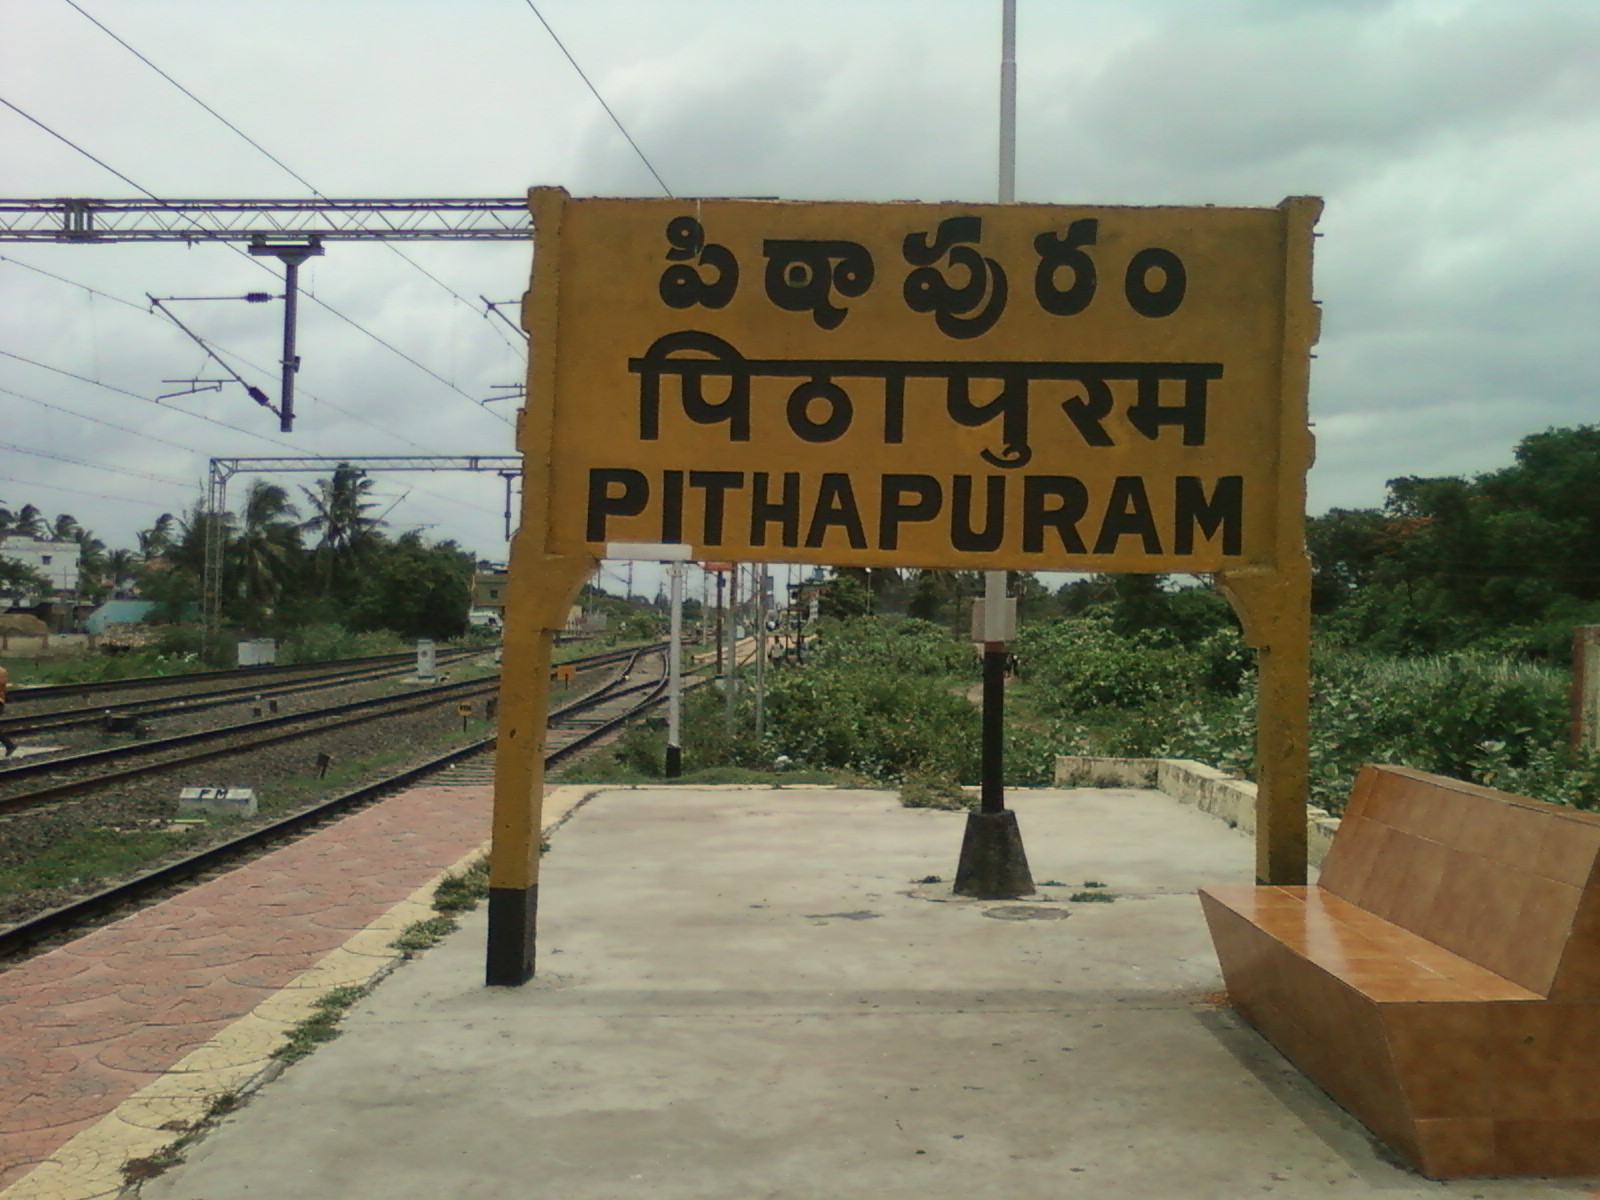 File:Pithapuram railway station nameboard.jpg - Wikimedia Commons